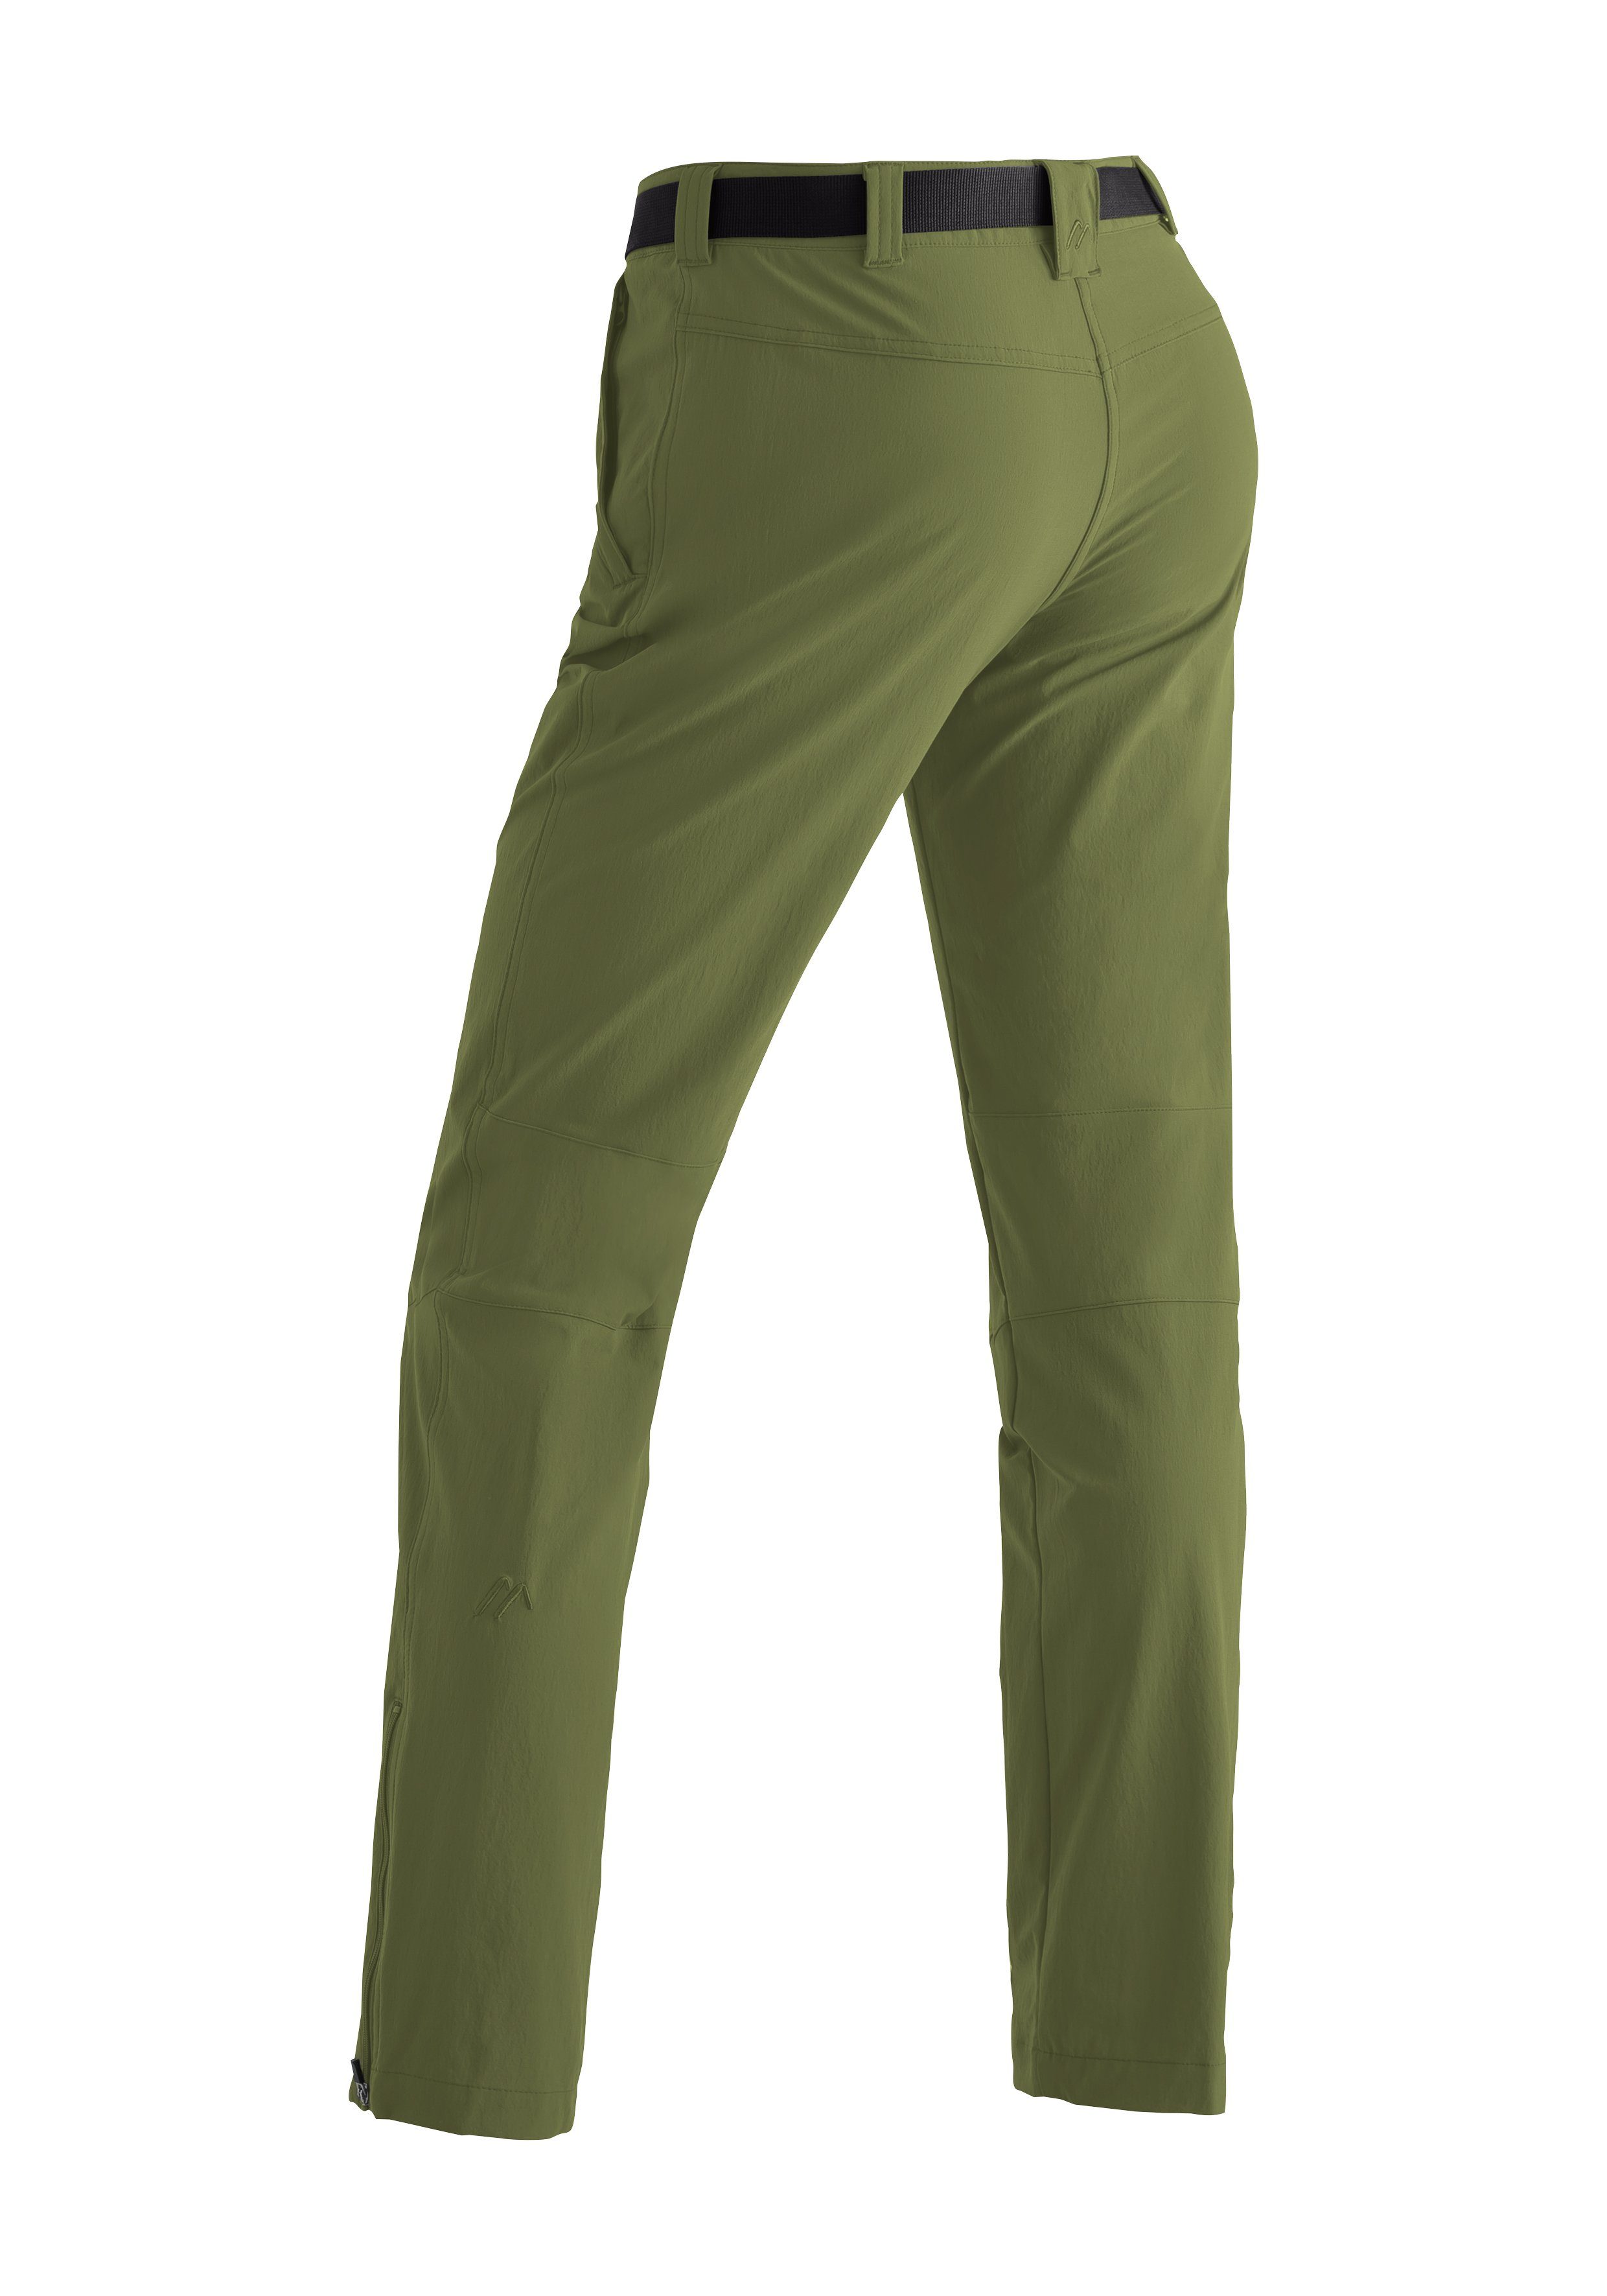 Outdoor-Hose moosgrün Wanderhose, Funktionshose Material Damen aus elastischem Maier Inara Sports slim